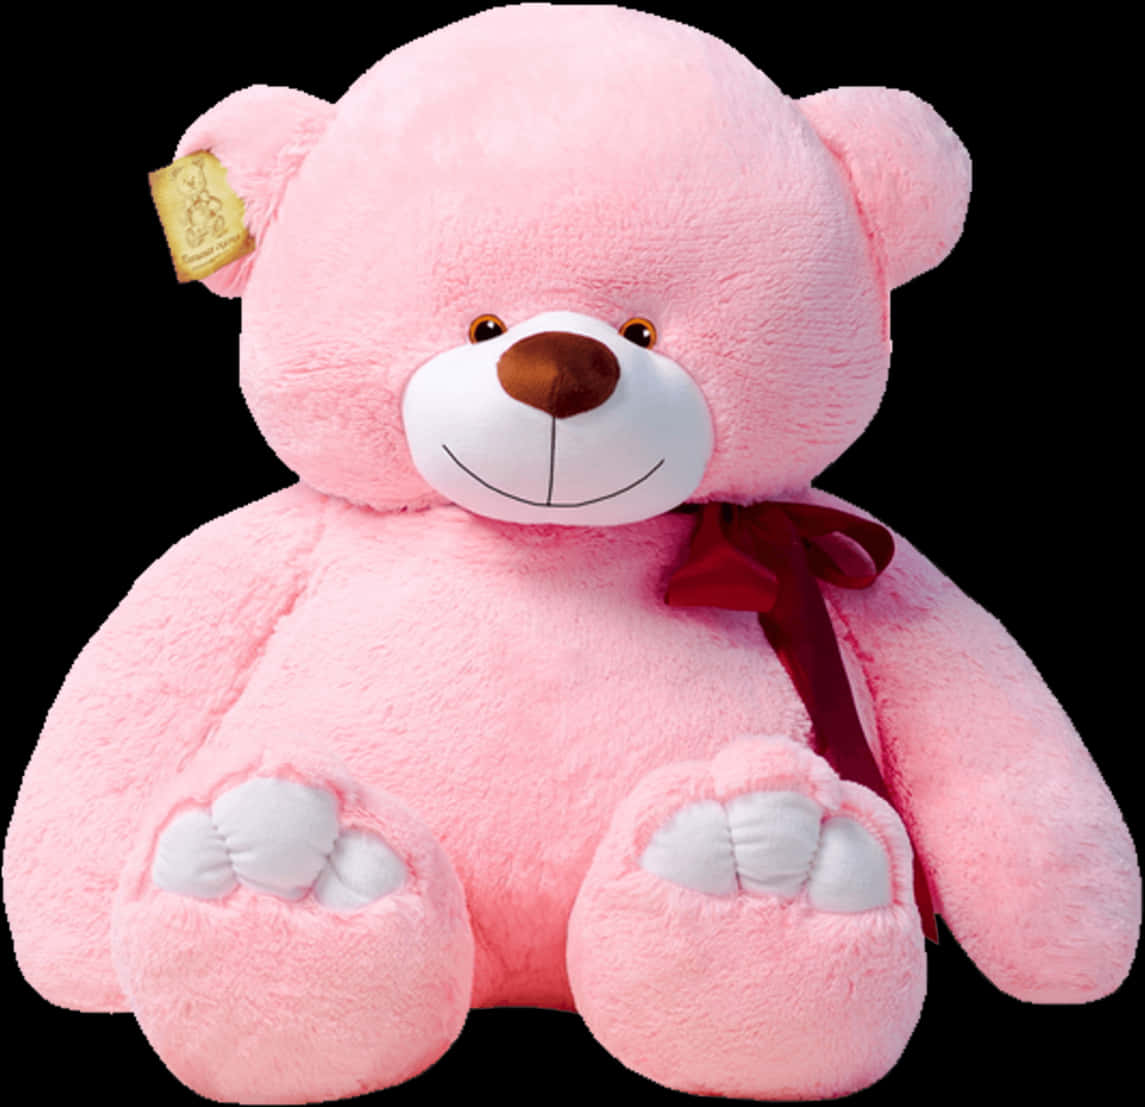 A Pink Teddy Bear With A Bow